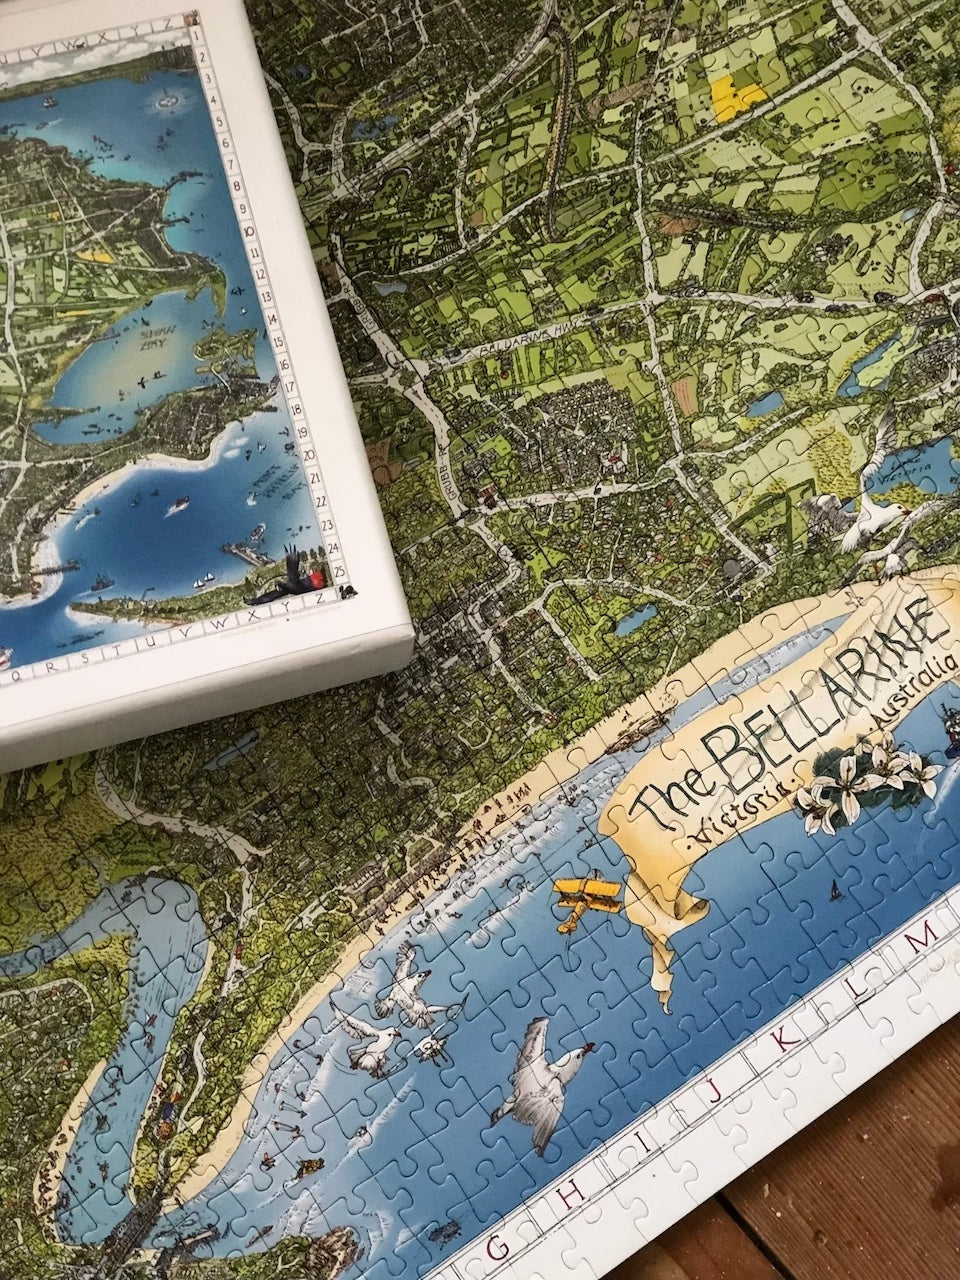 The Bellarine Map Jigsaw Puzzle